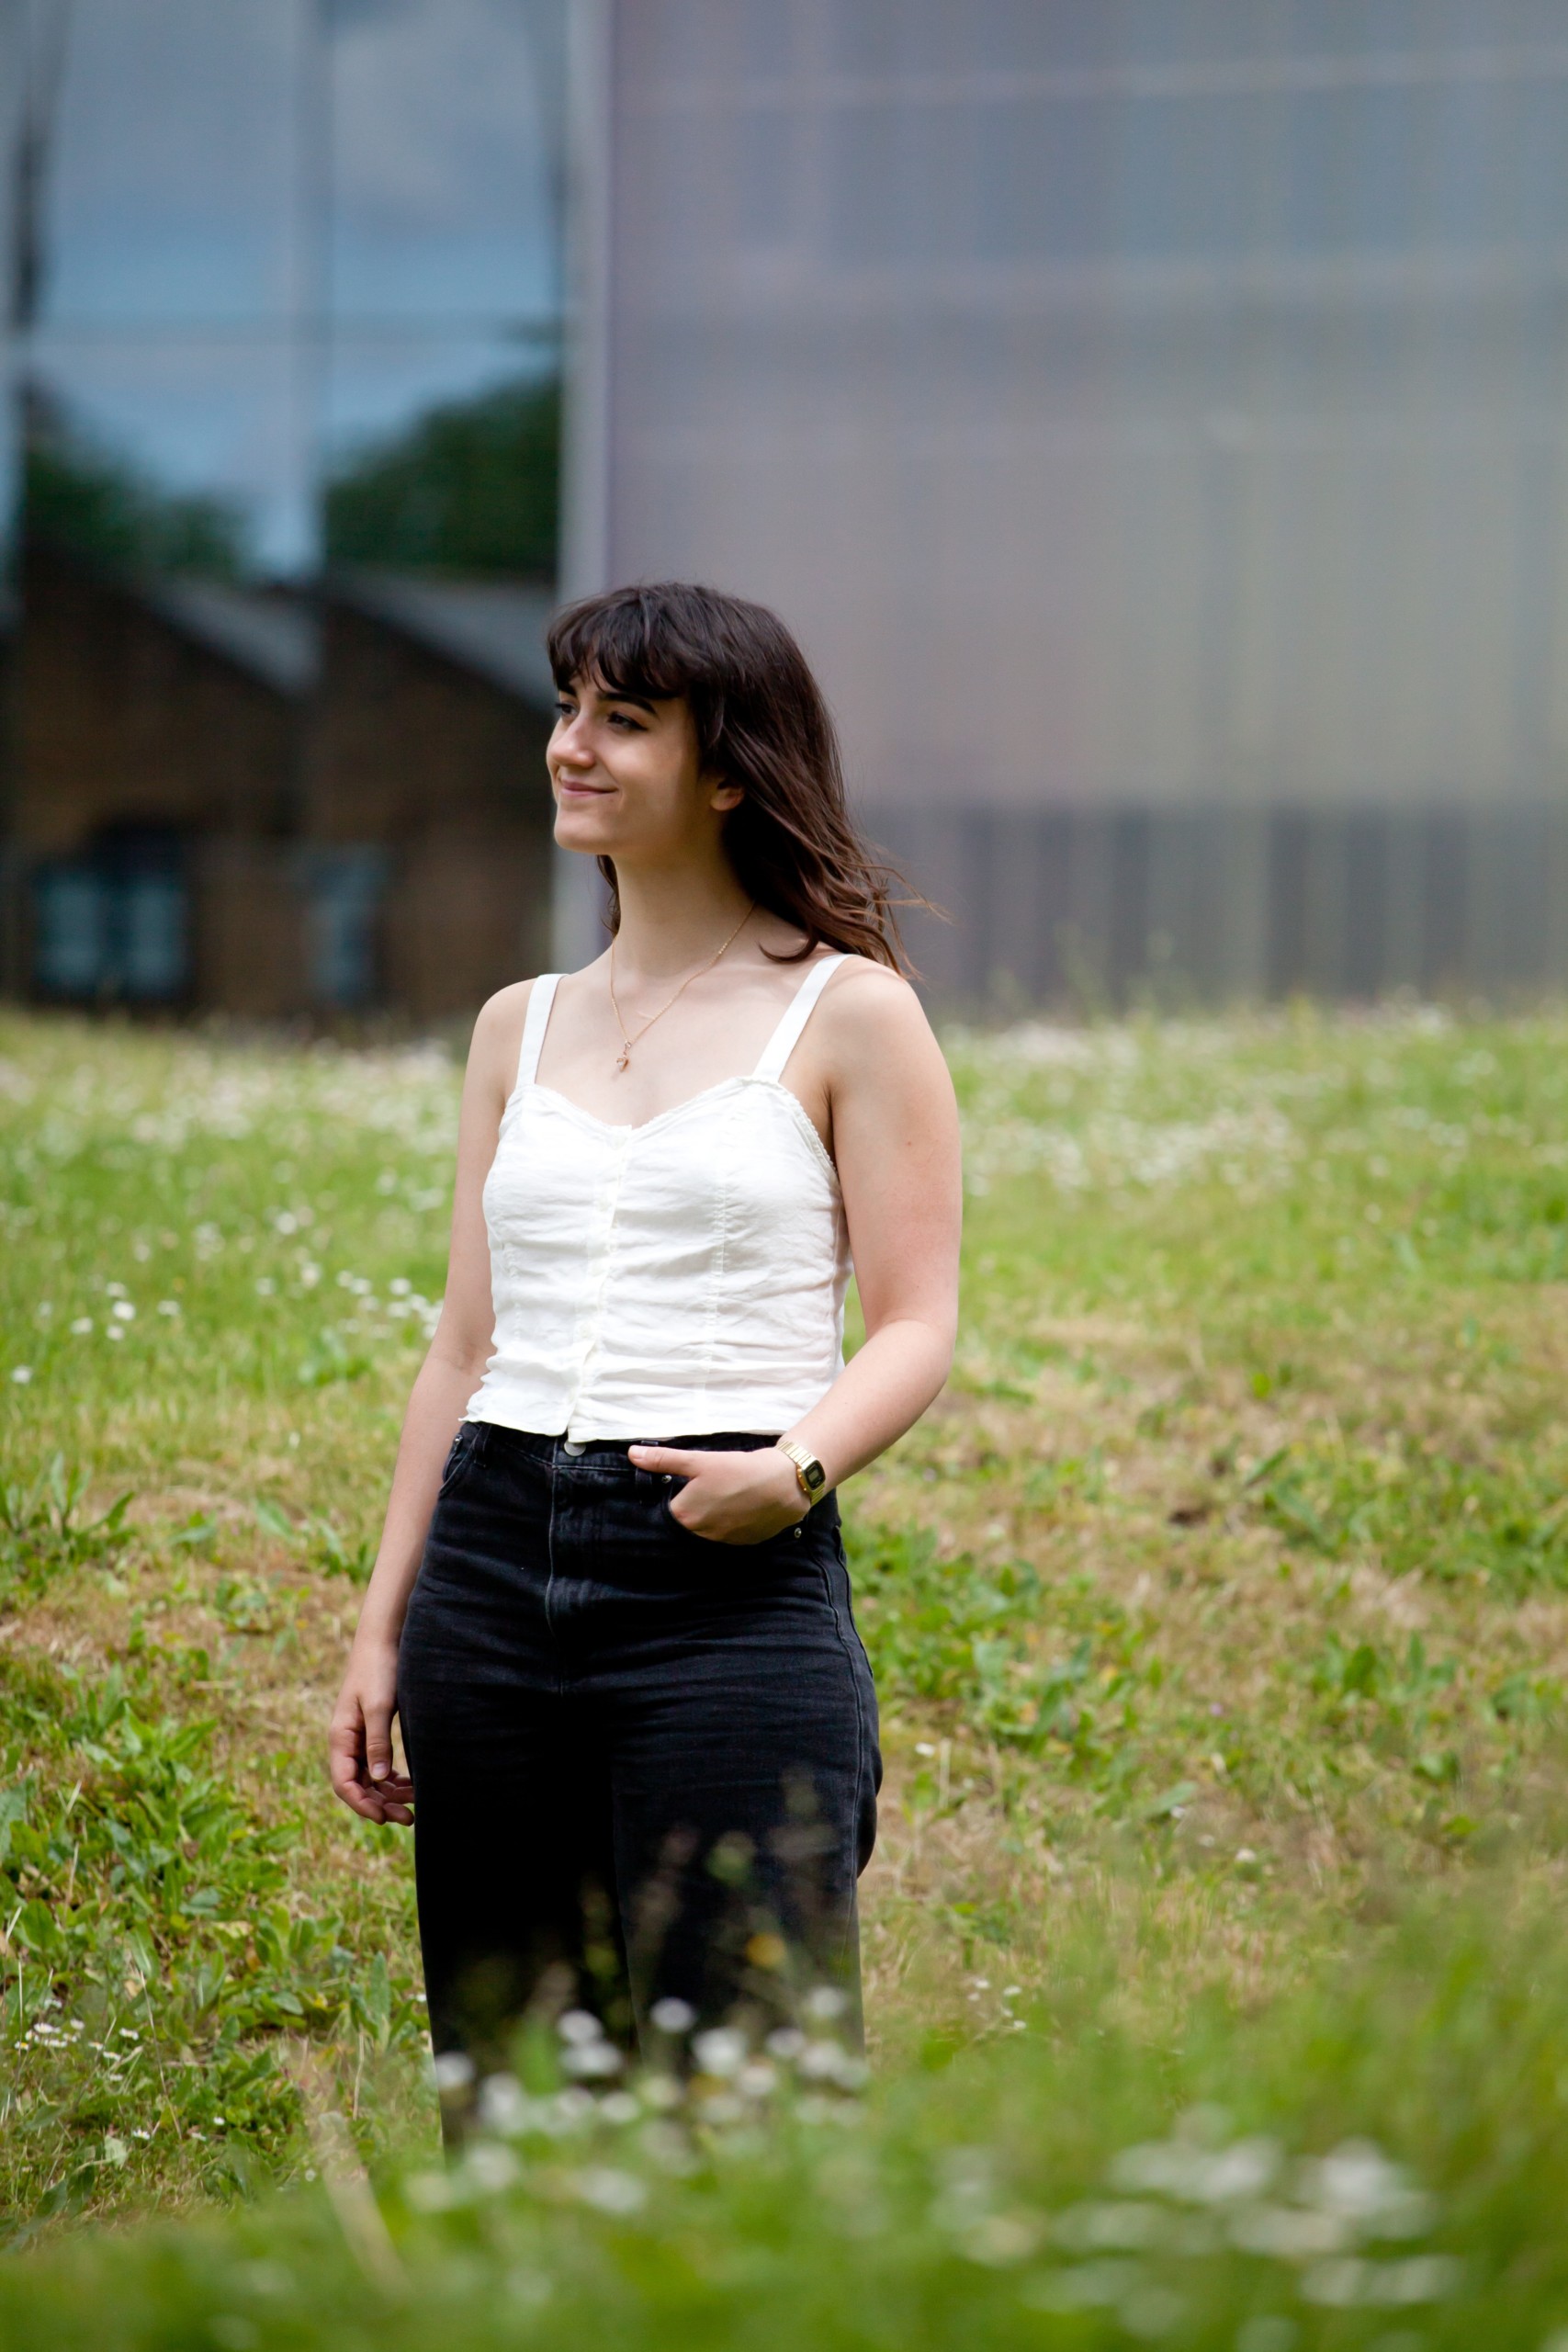 Myra Brownbridge standing in grassy field with left hand in pocket